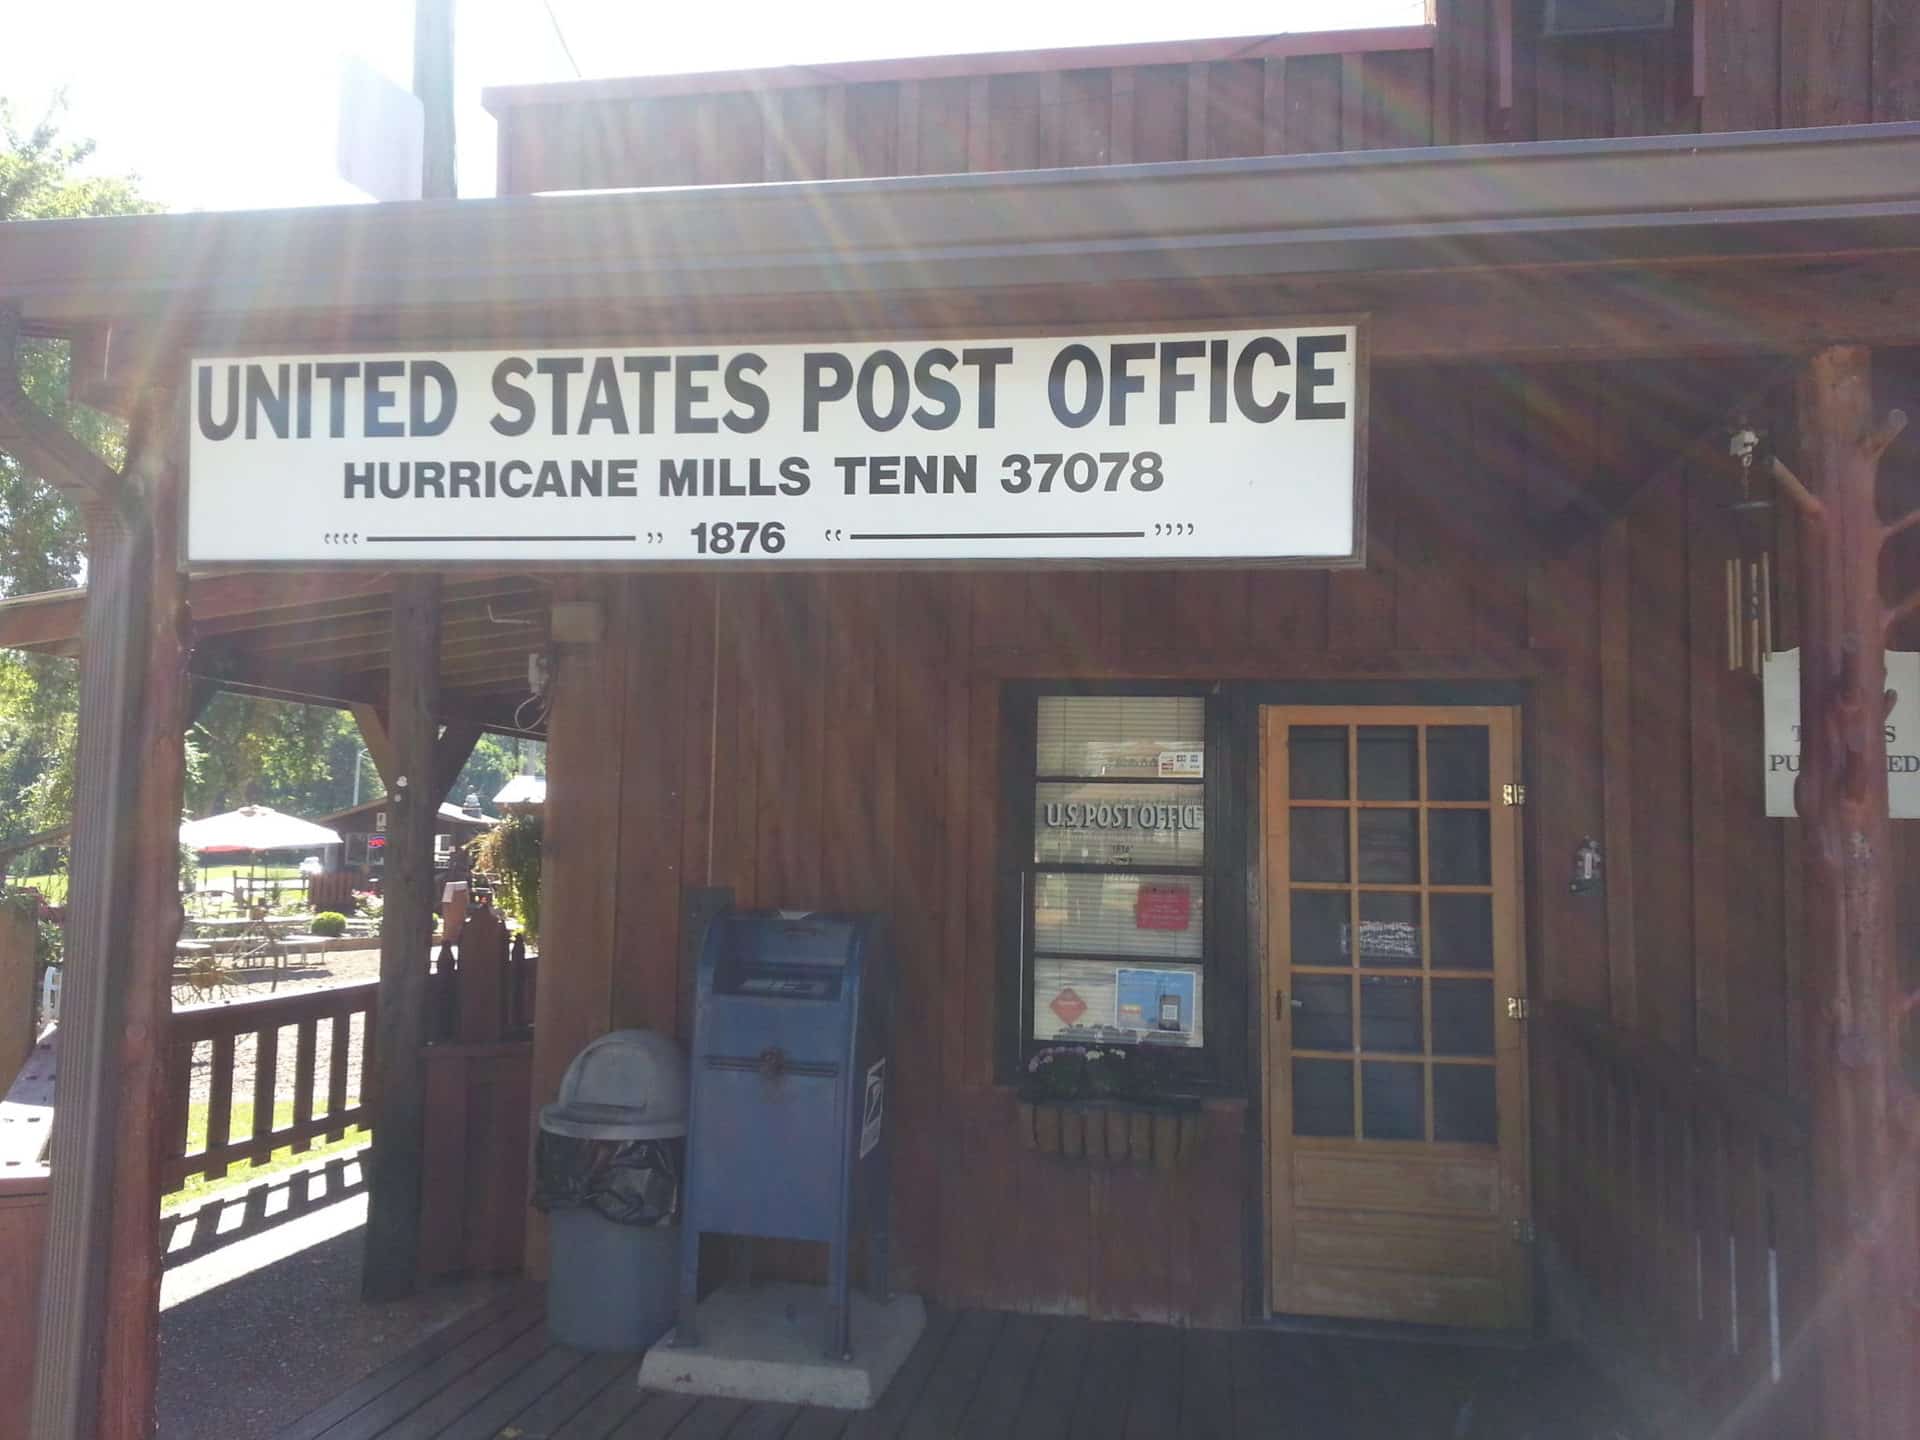 loretta lynn's ranch's post office